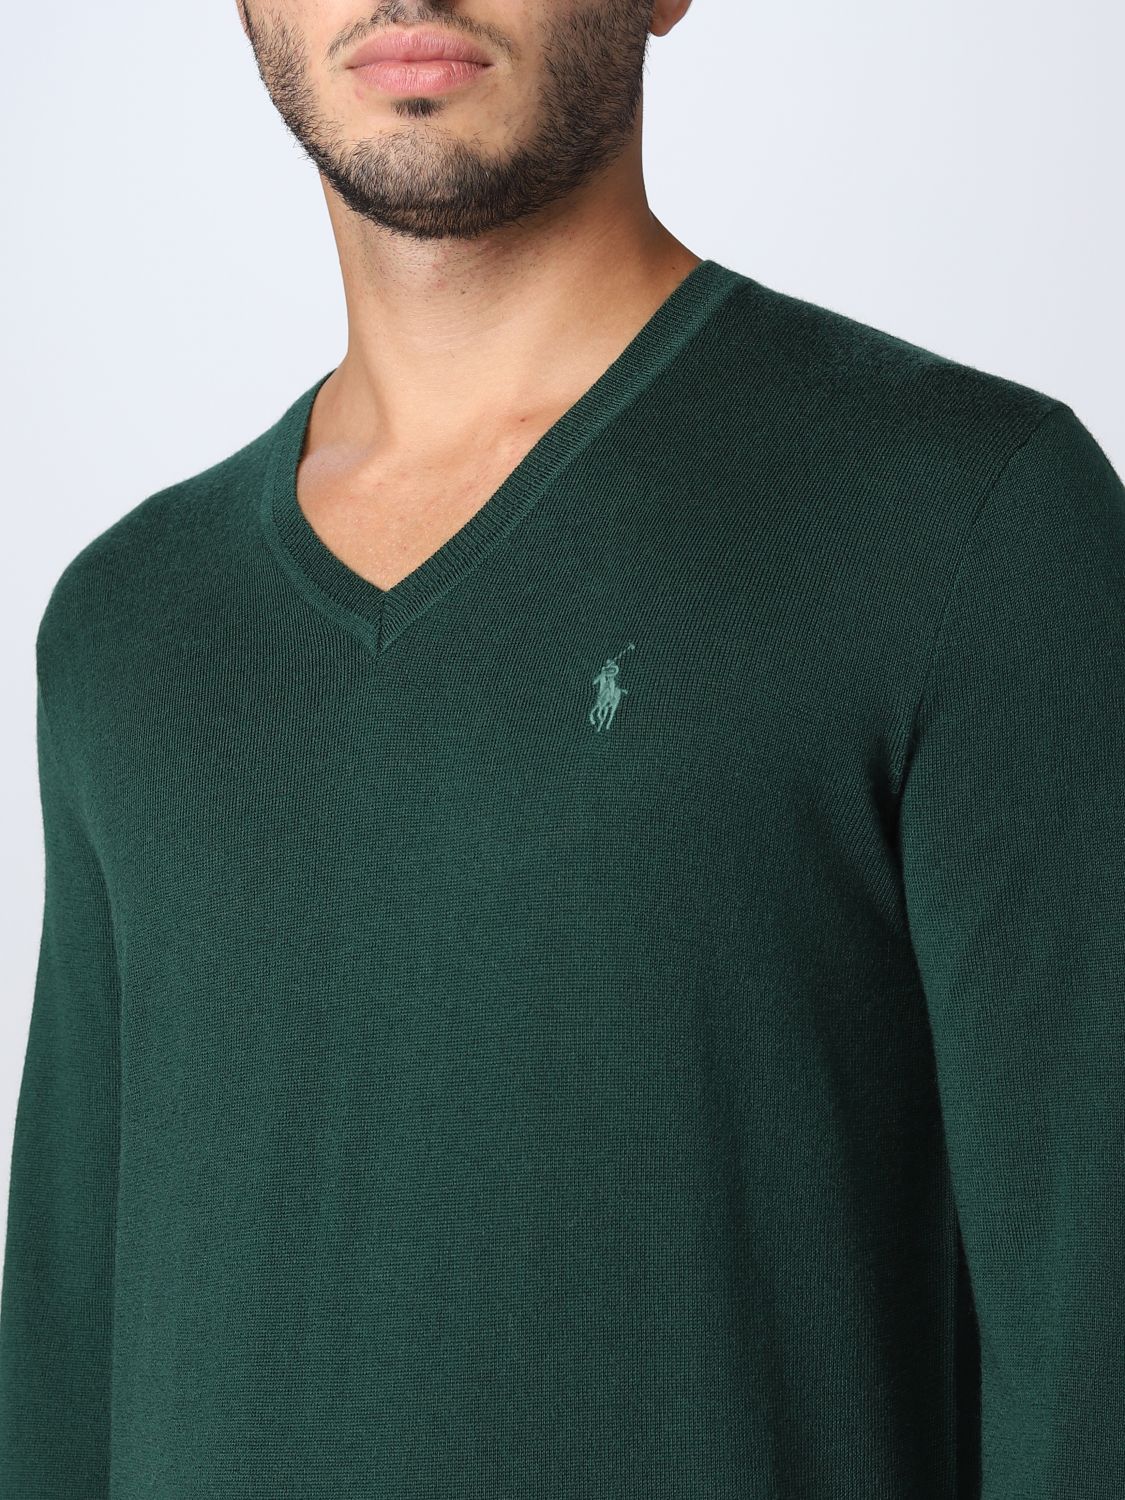 POLO RALPH LAUREN: sweater for man - Green | Polo Ralph Lauren sweater  710876848 online on 